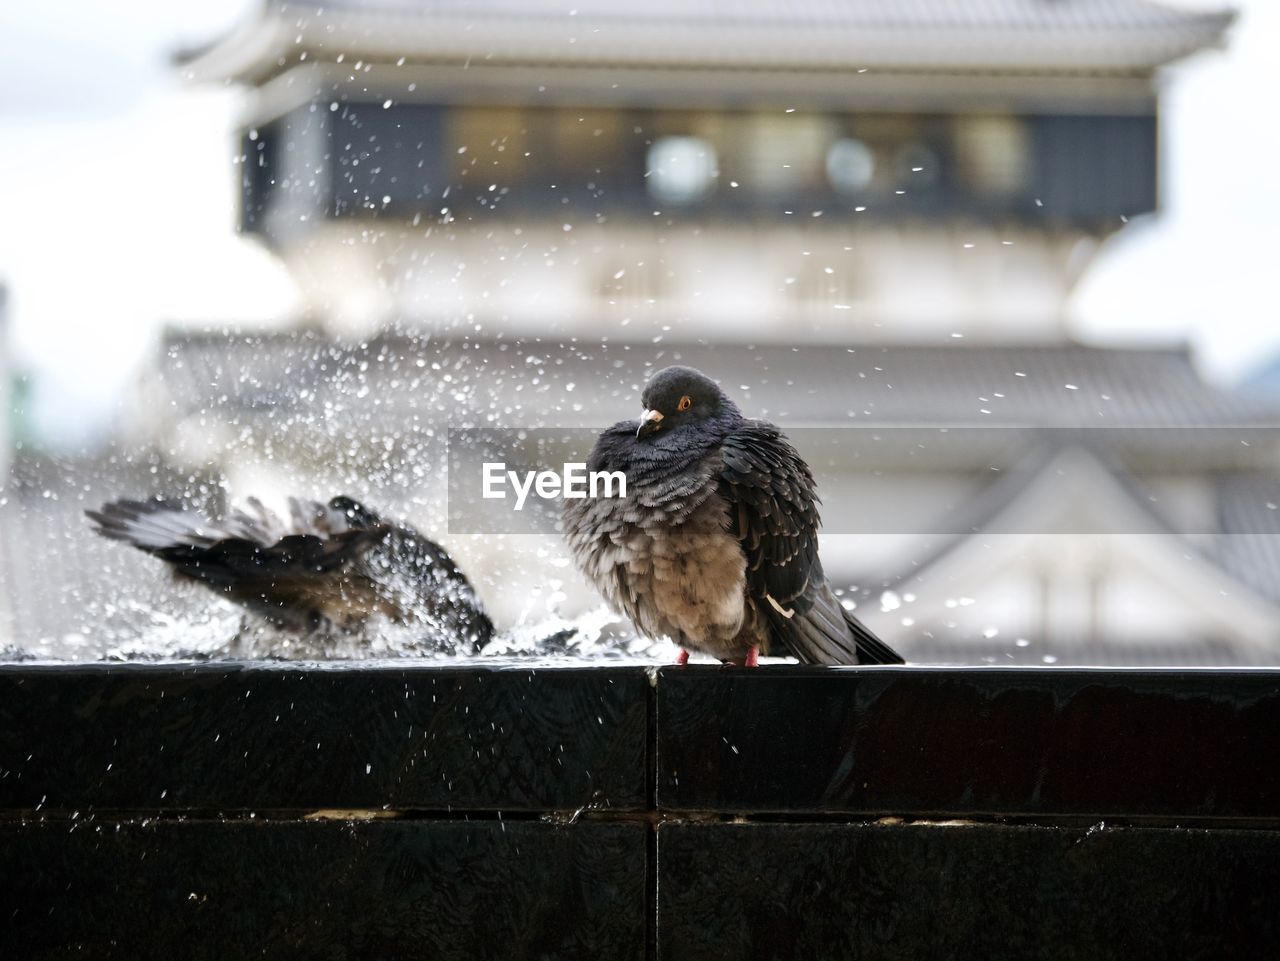 Pigeon puffing chest near splashing pigeon 